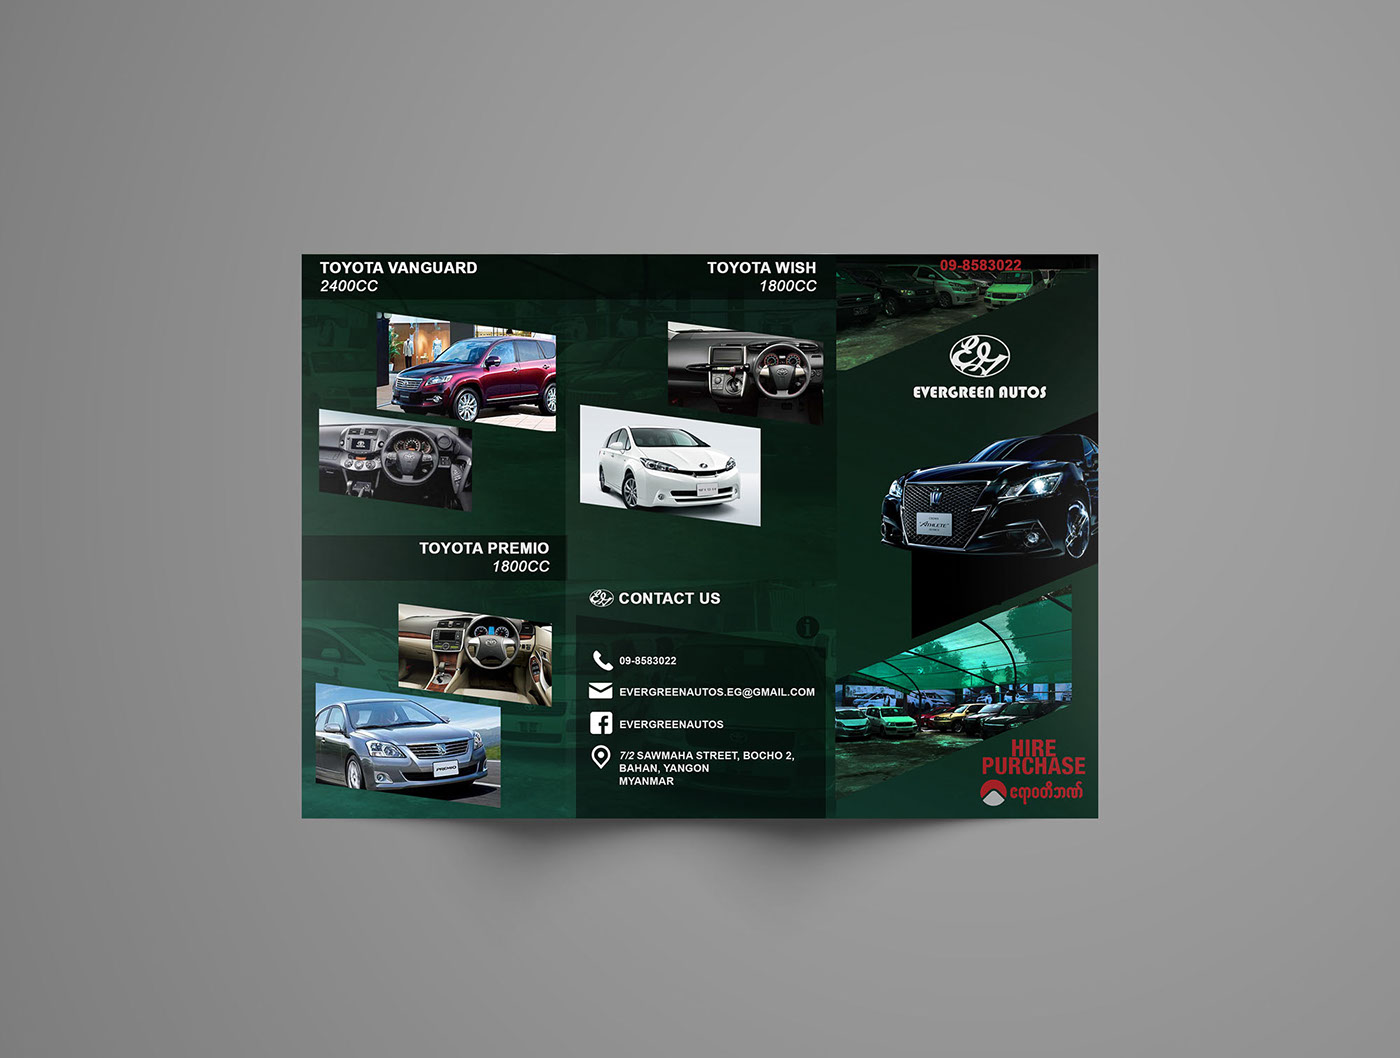 myanmar burma Cars Rebrand brand identity graphic design 